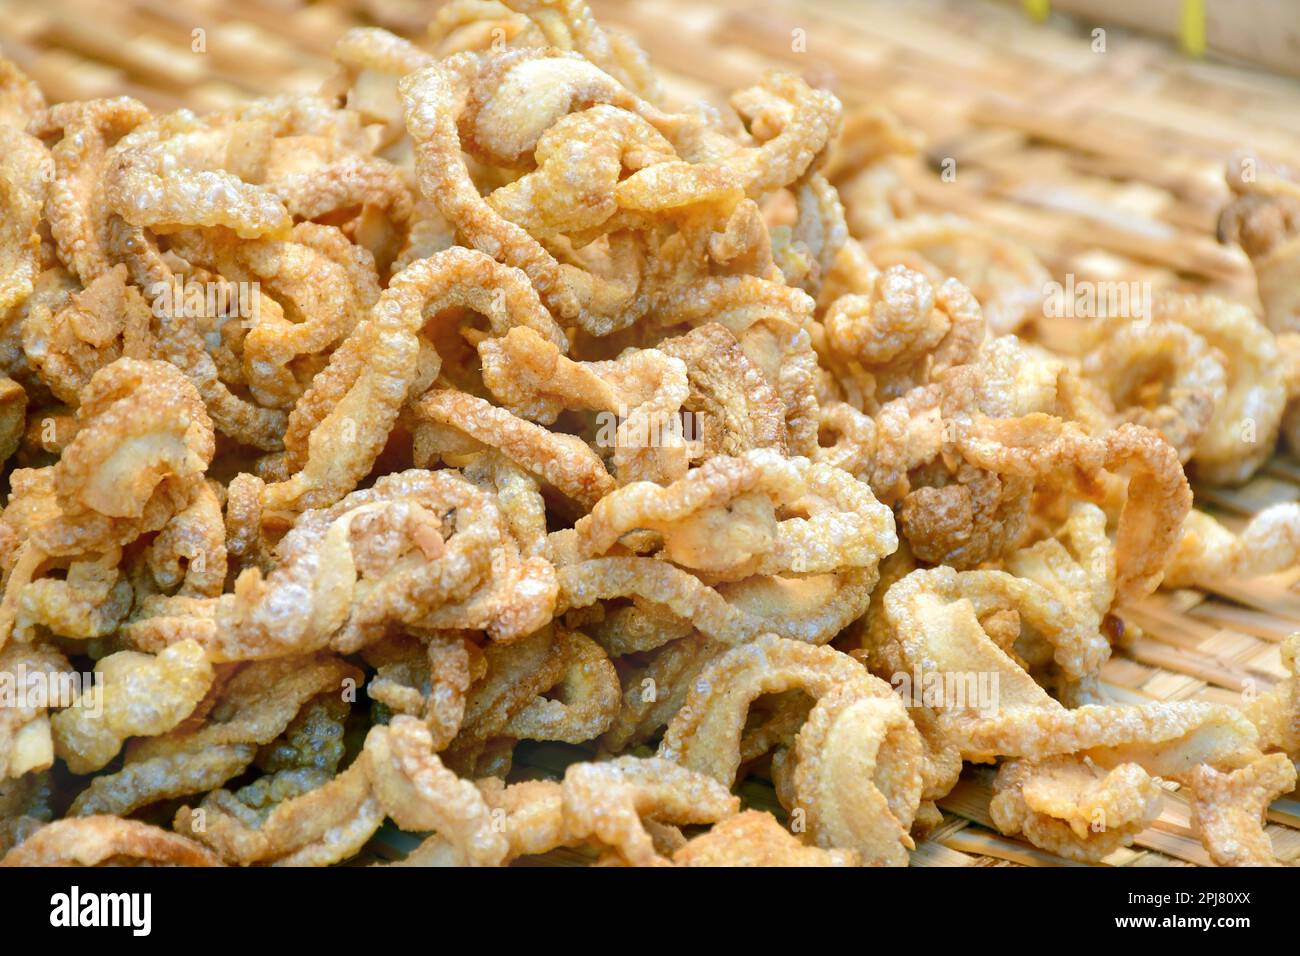 Thai street food, Pork rinds or deep fried pork skin, a yummy snack. Stock Photo